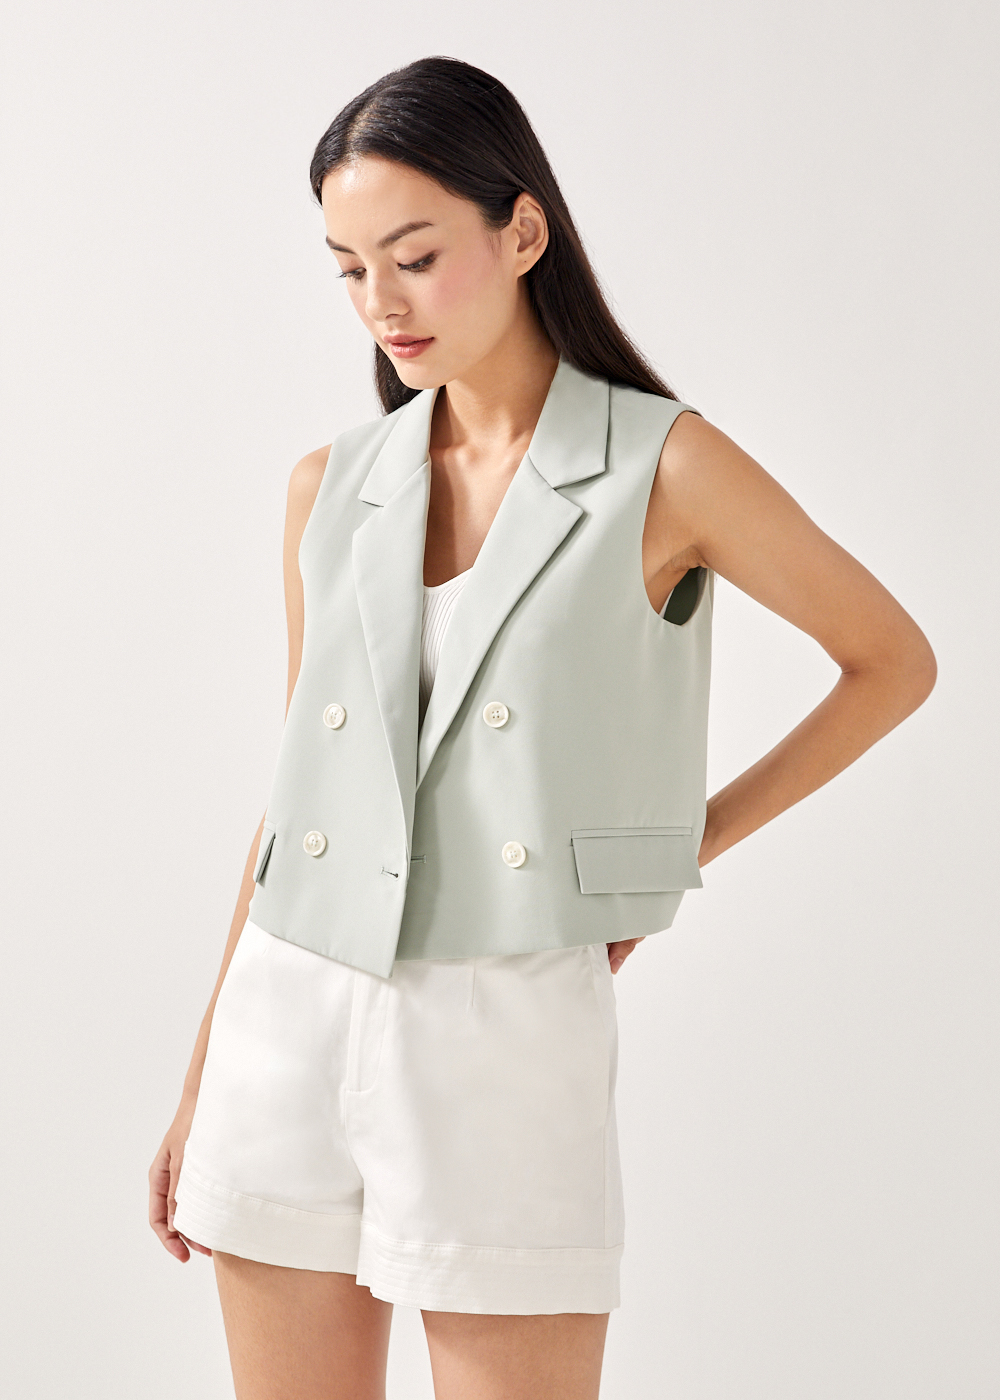 Buy Madine Tailored Cropped Vest @ Love, Bonito Singapore